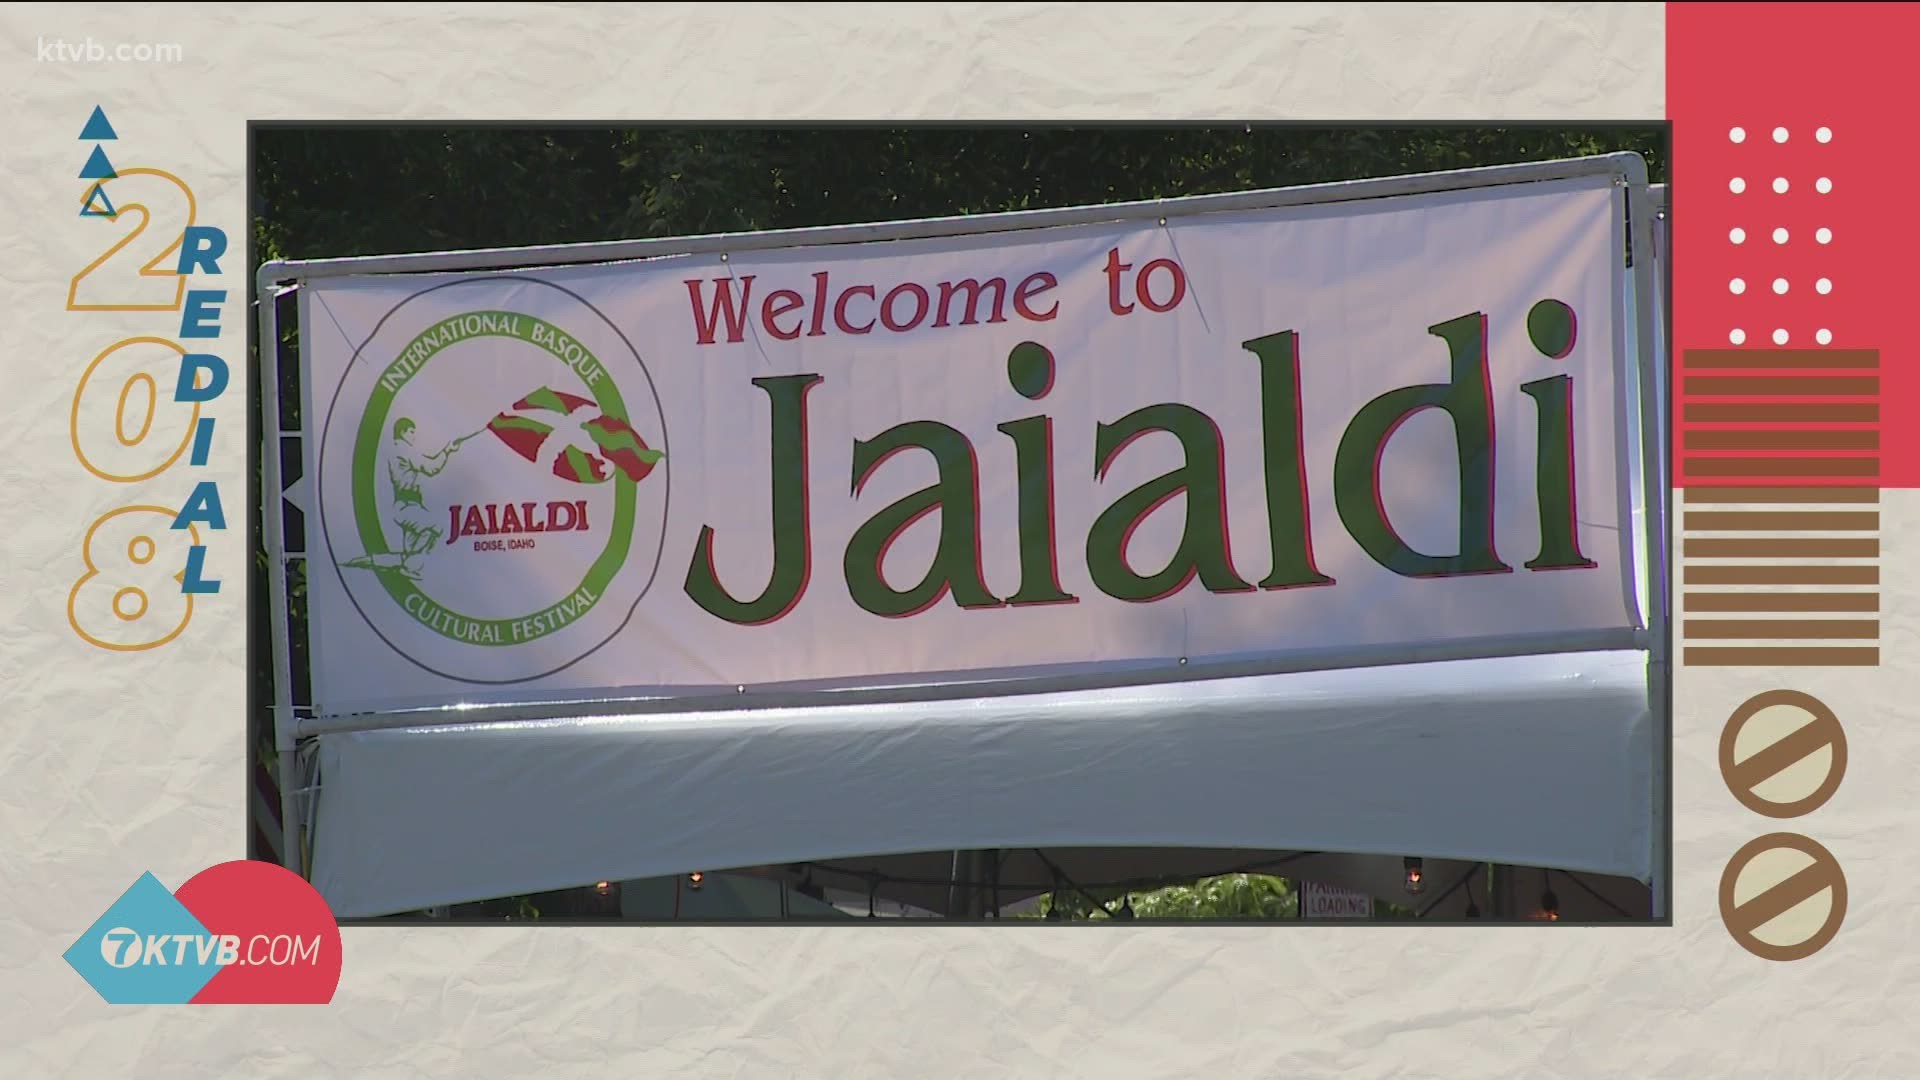 Because of the coronavirus pandemic, the Idaho Jaialdi celebration cannot take place. We're looking back on the 2015 celebration.